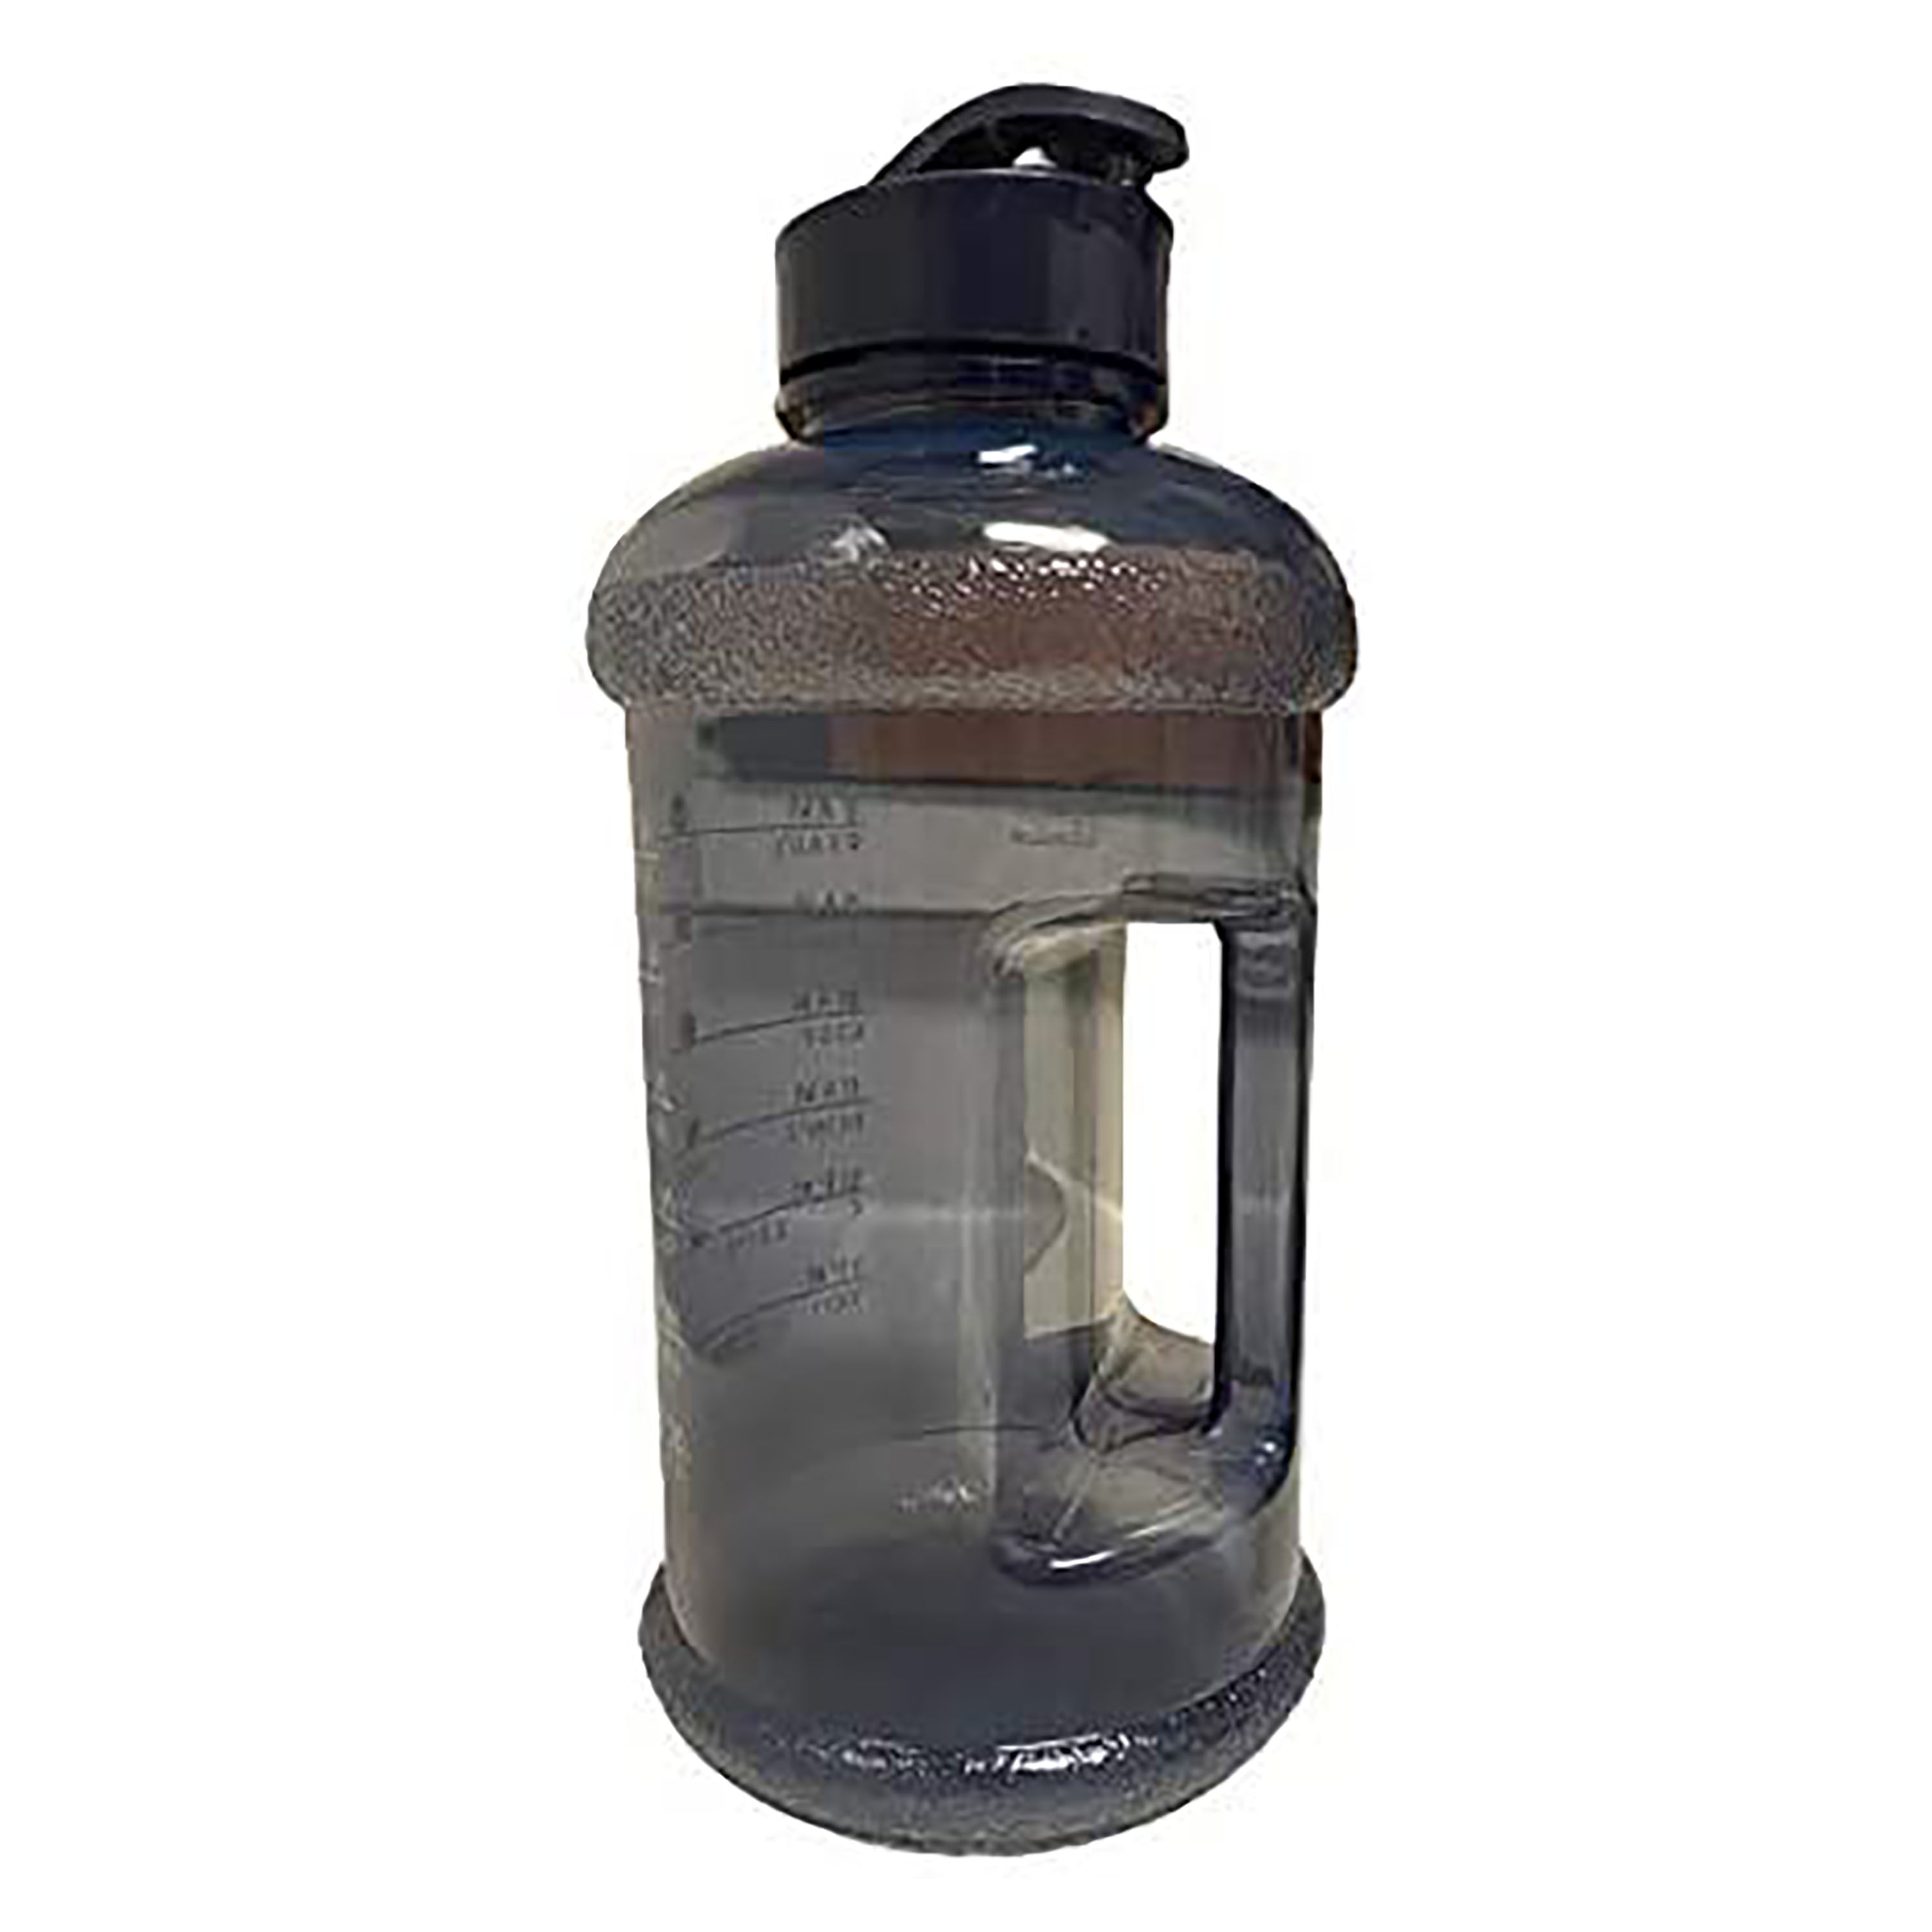 Botella para Agua 680ml – Waldo's